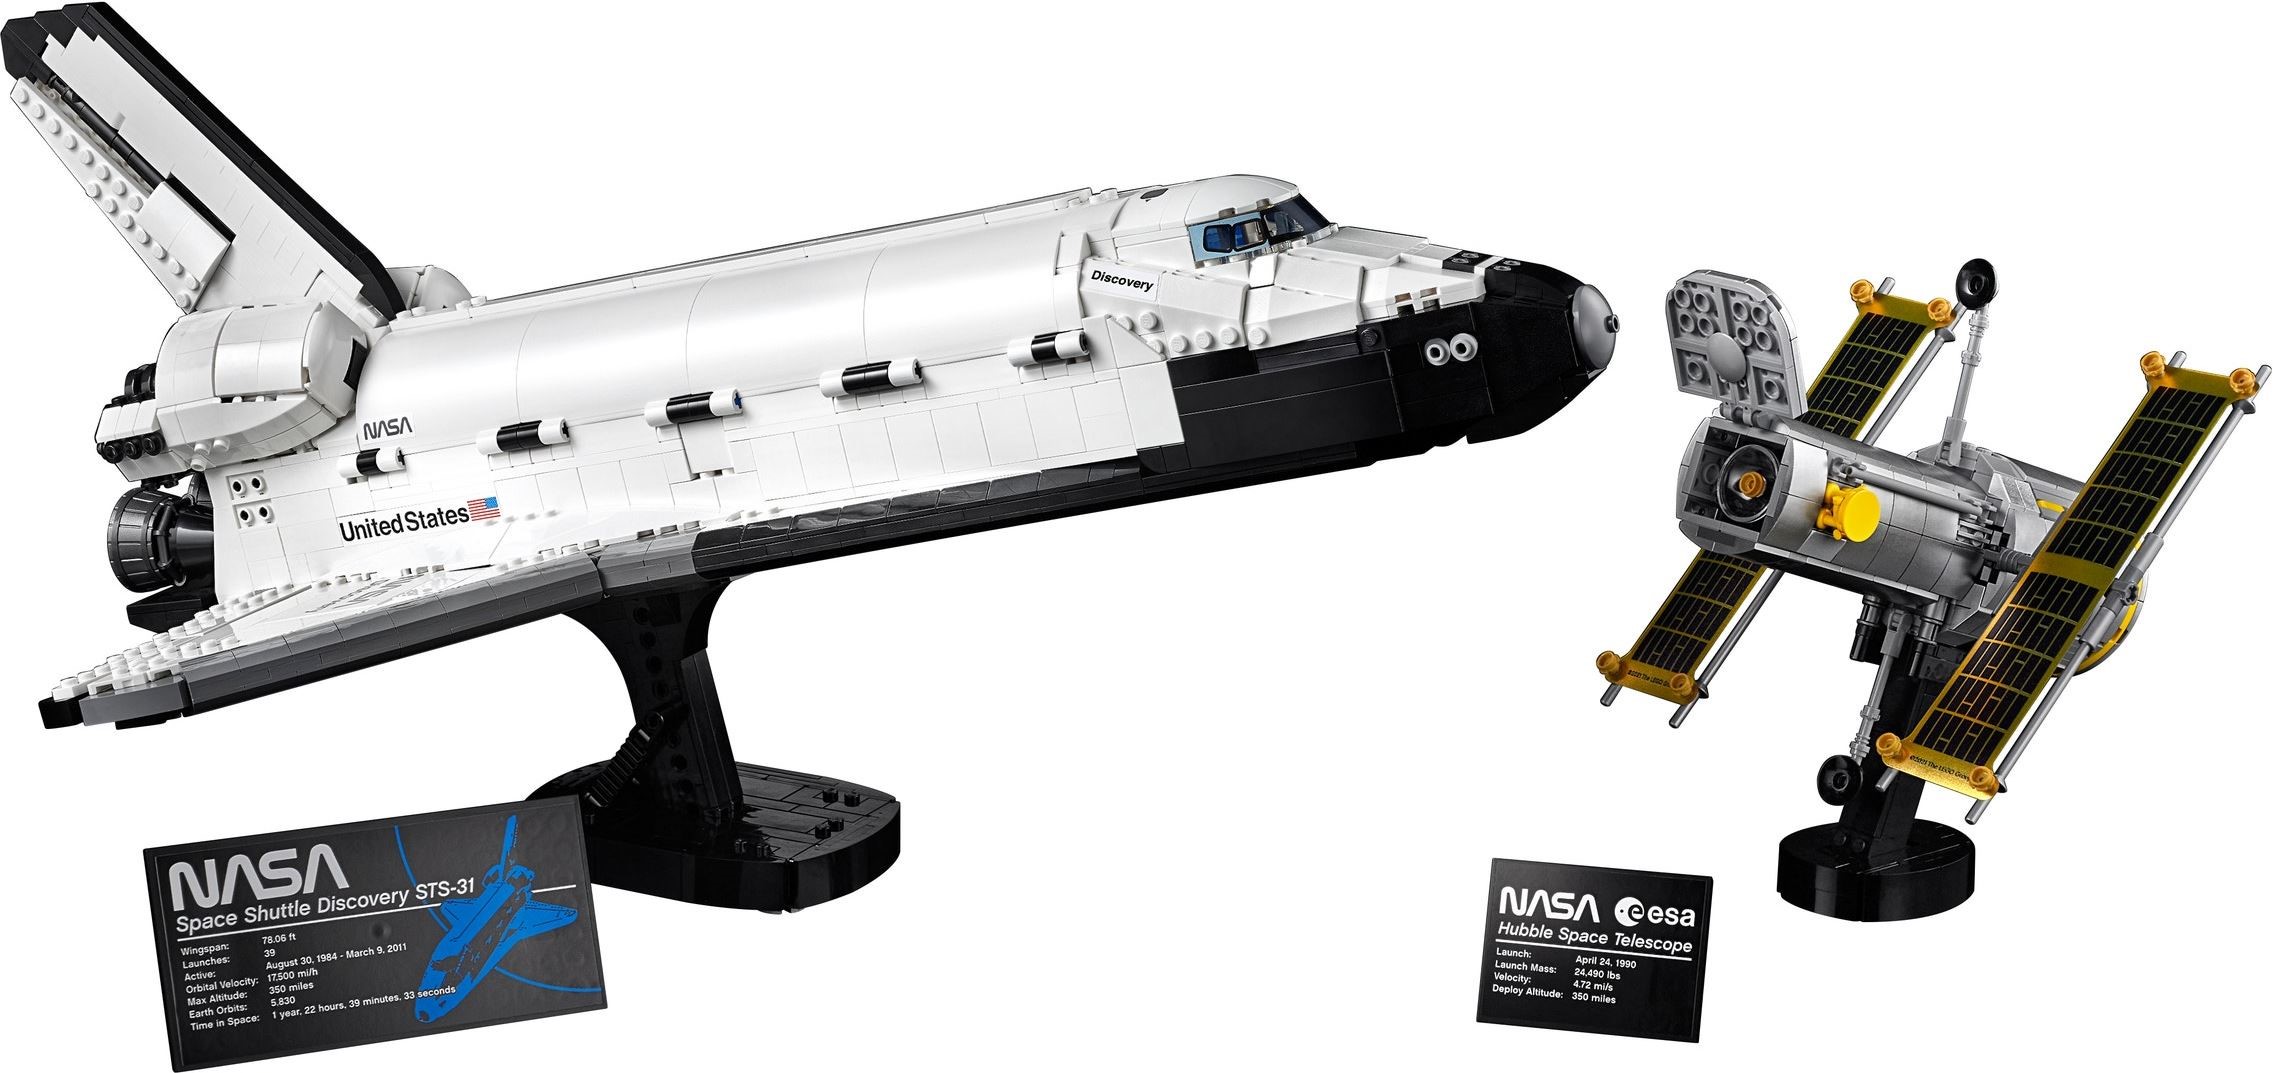 LEGO 10283 SPACE SHUTTLE DISCOVERY (Космический шаттл НАСА «Дискавери»)